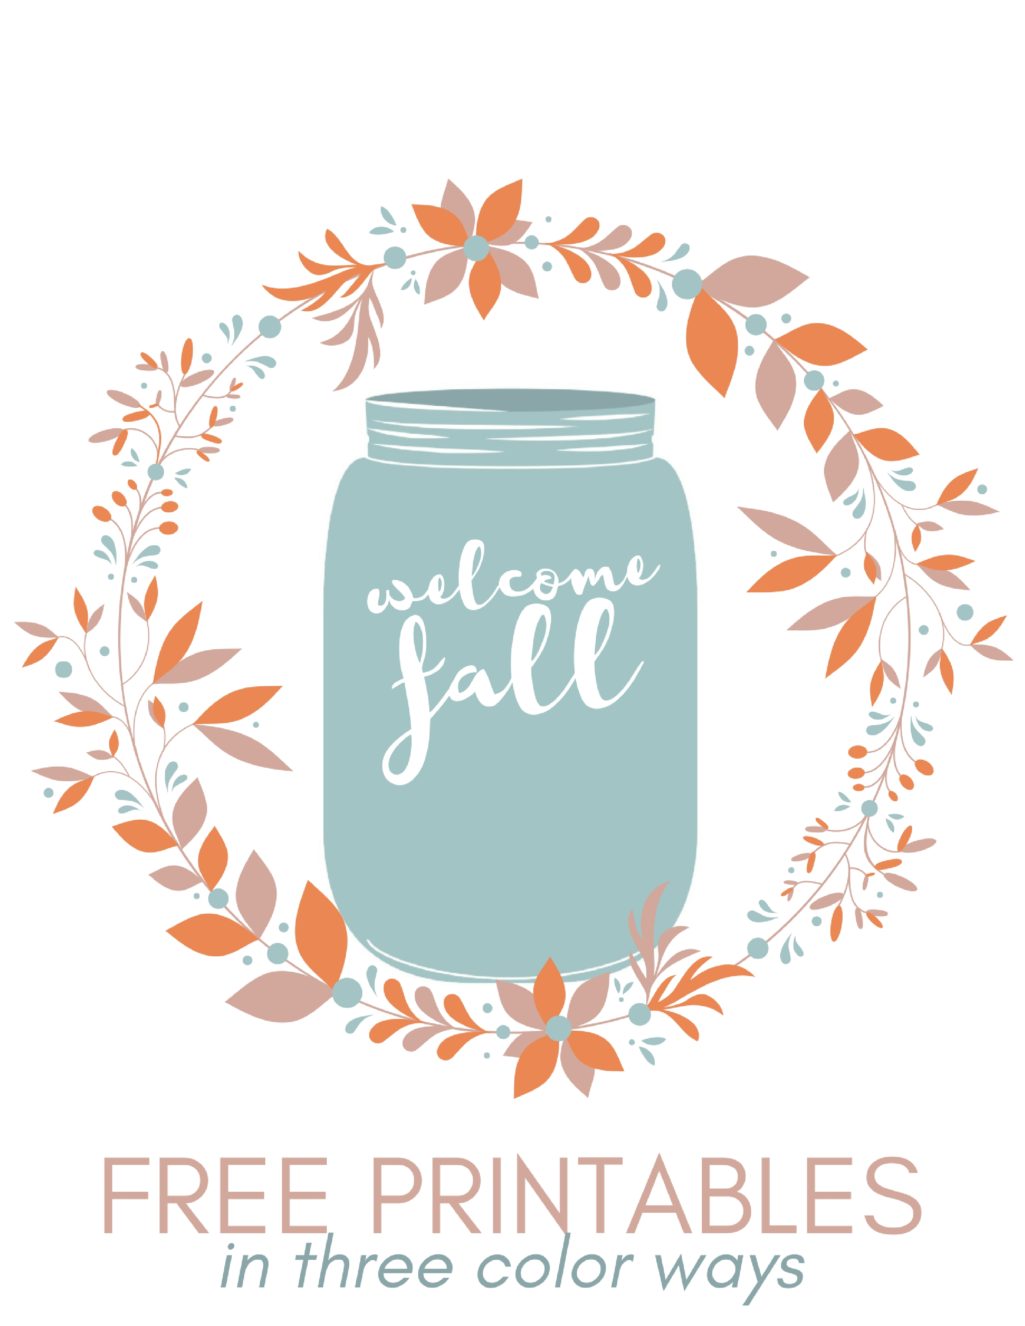 FREE “WELCOME FALL” MASON JAR PRINTABLES